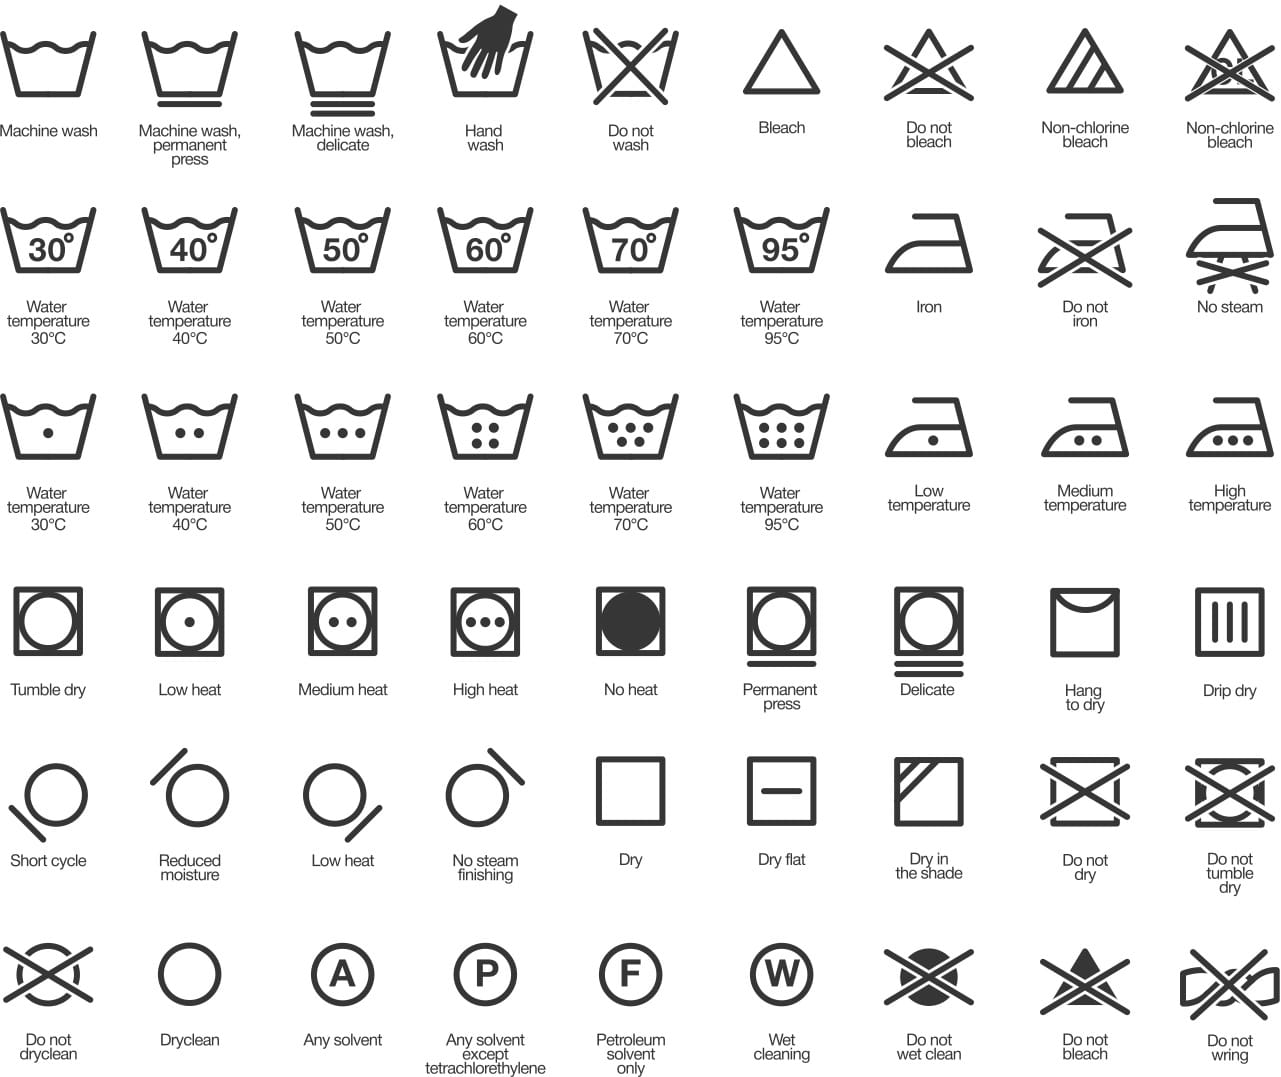 clothes washing symbols canada